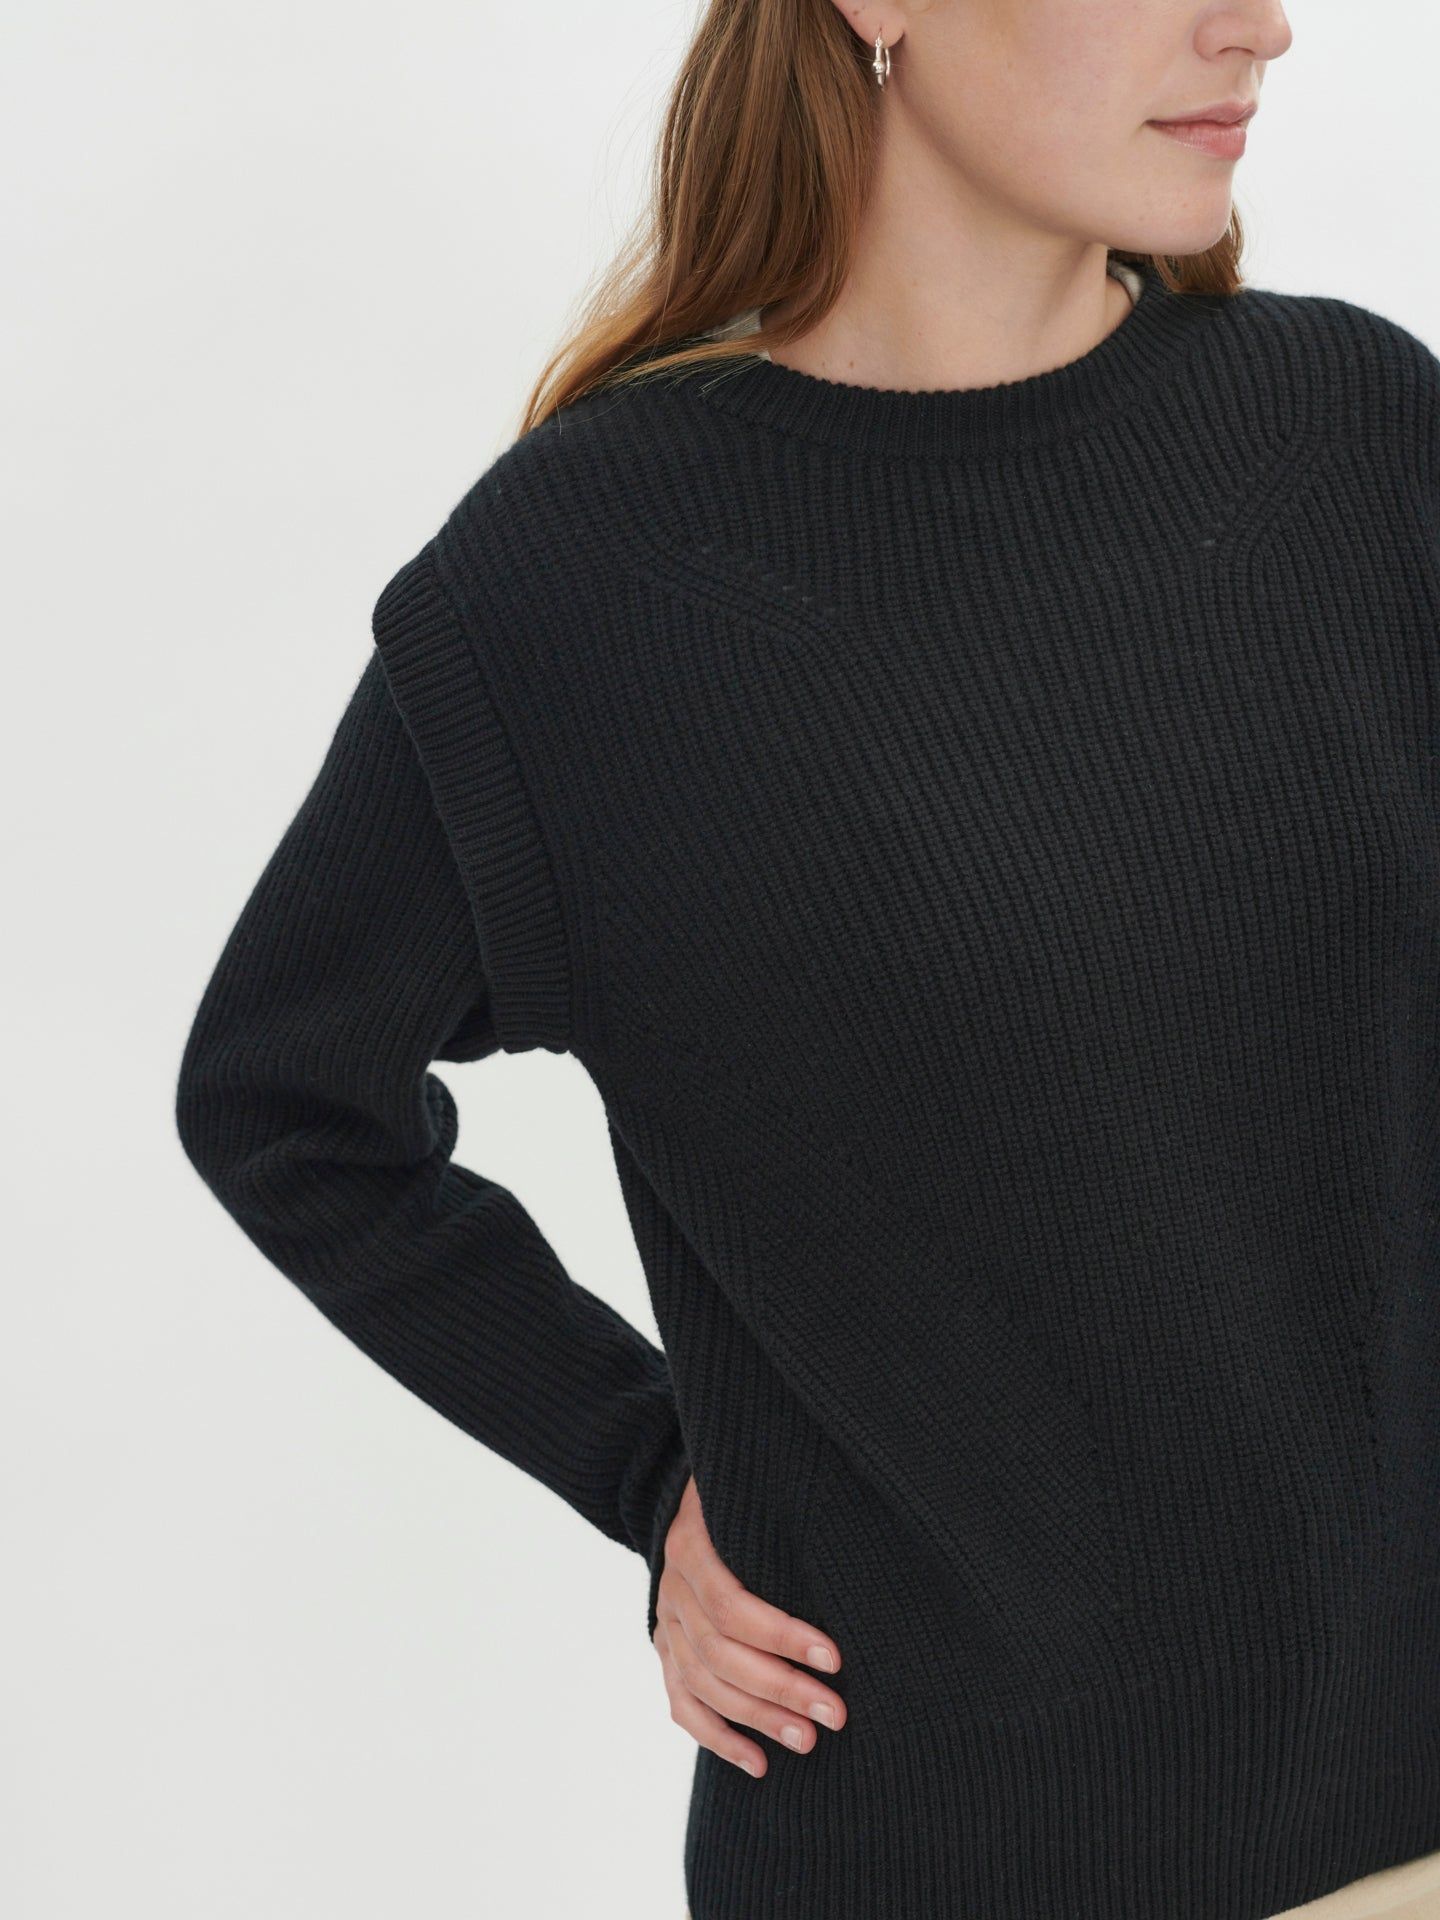 Damen Layered Effect Pullover aus Kaschmir Schwarz - Gobi Cashmere